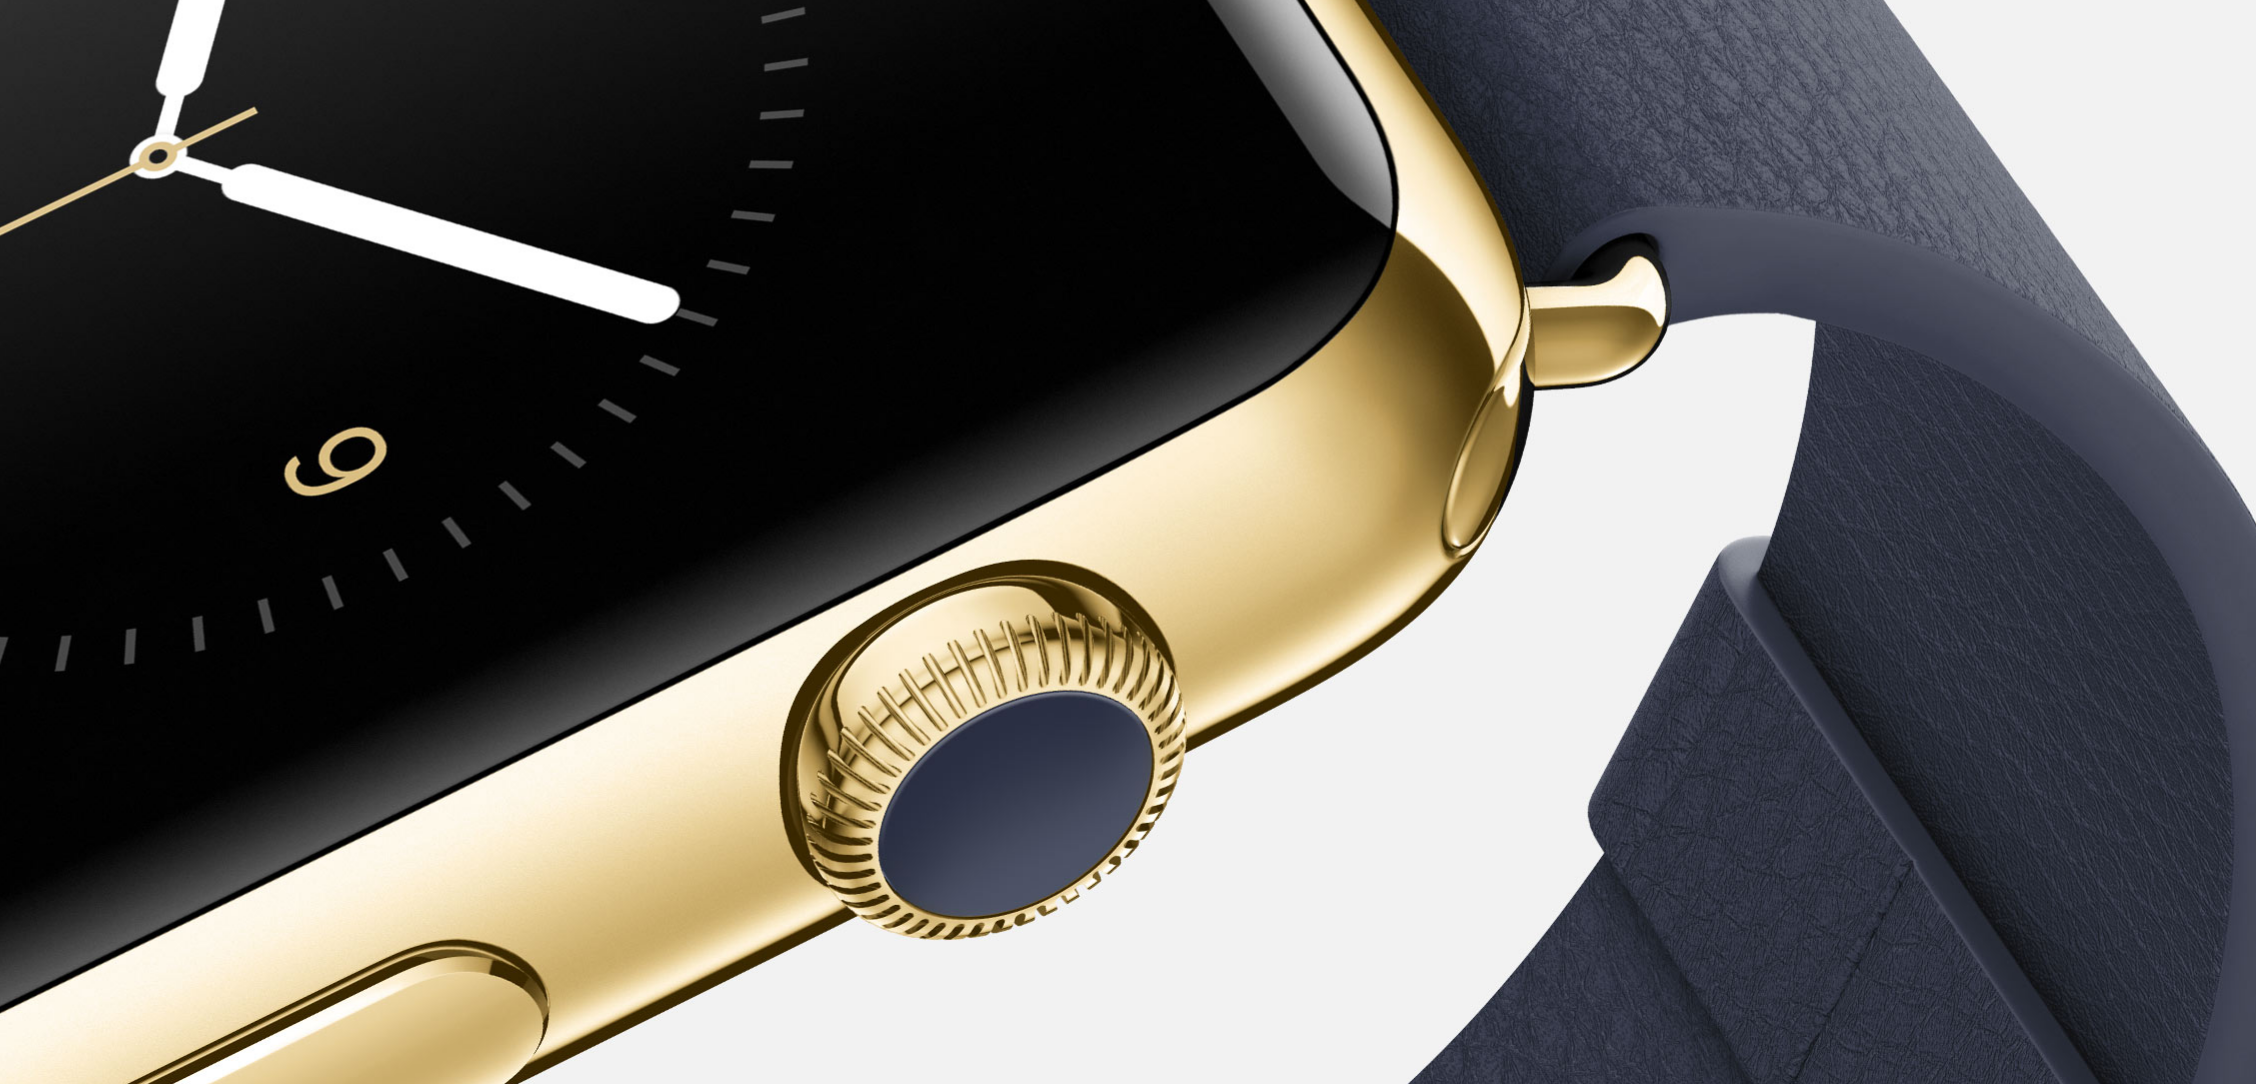 [JAILBREAK] Apple Watch bereits jailbroken?